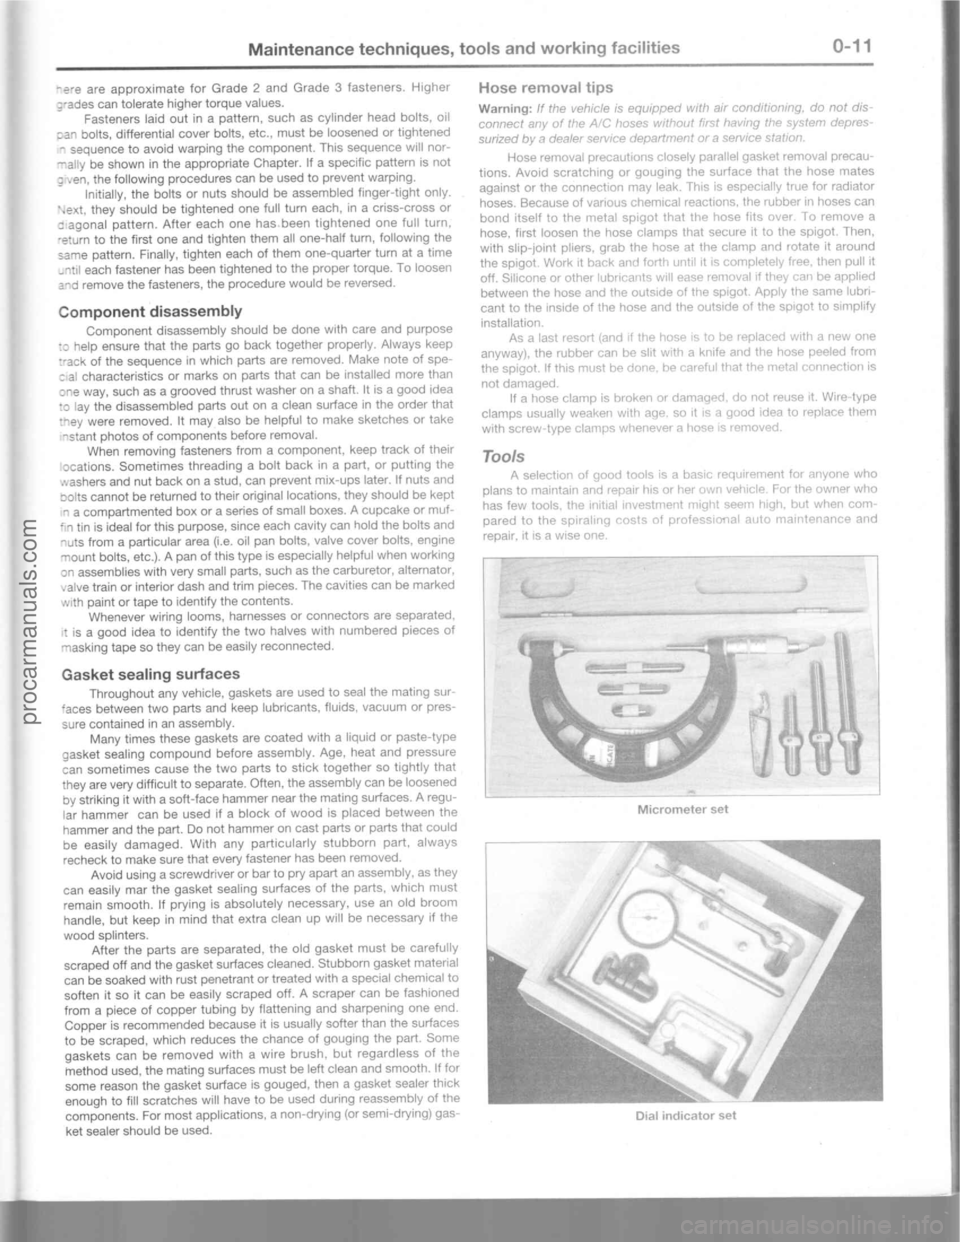 FORD MUSTANG 1994  Service User Guide procarmanuals.com 